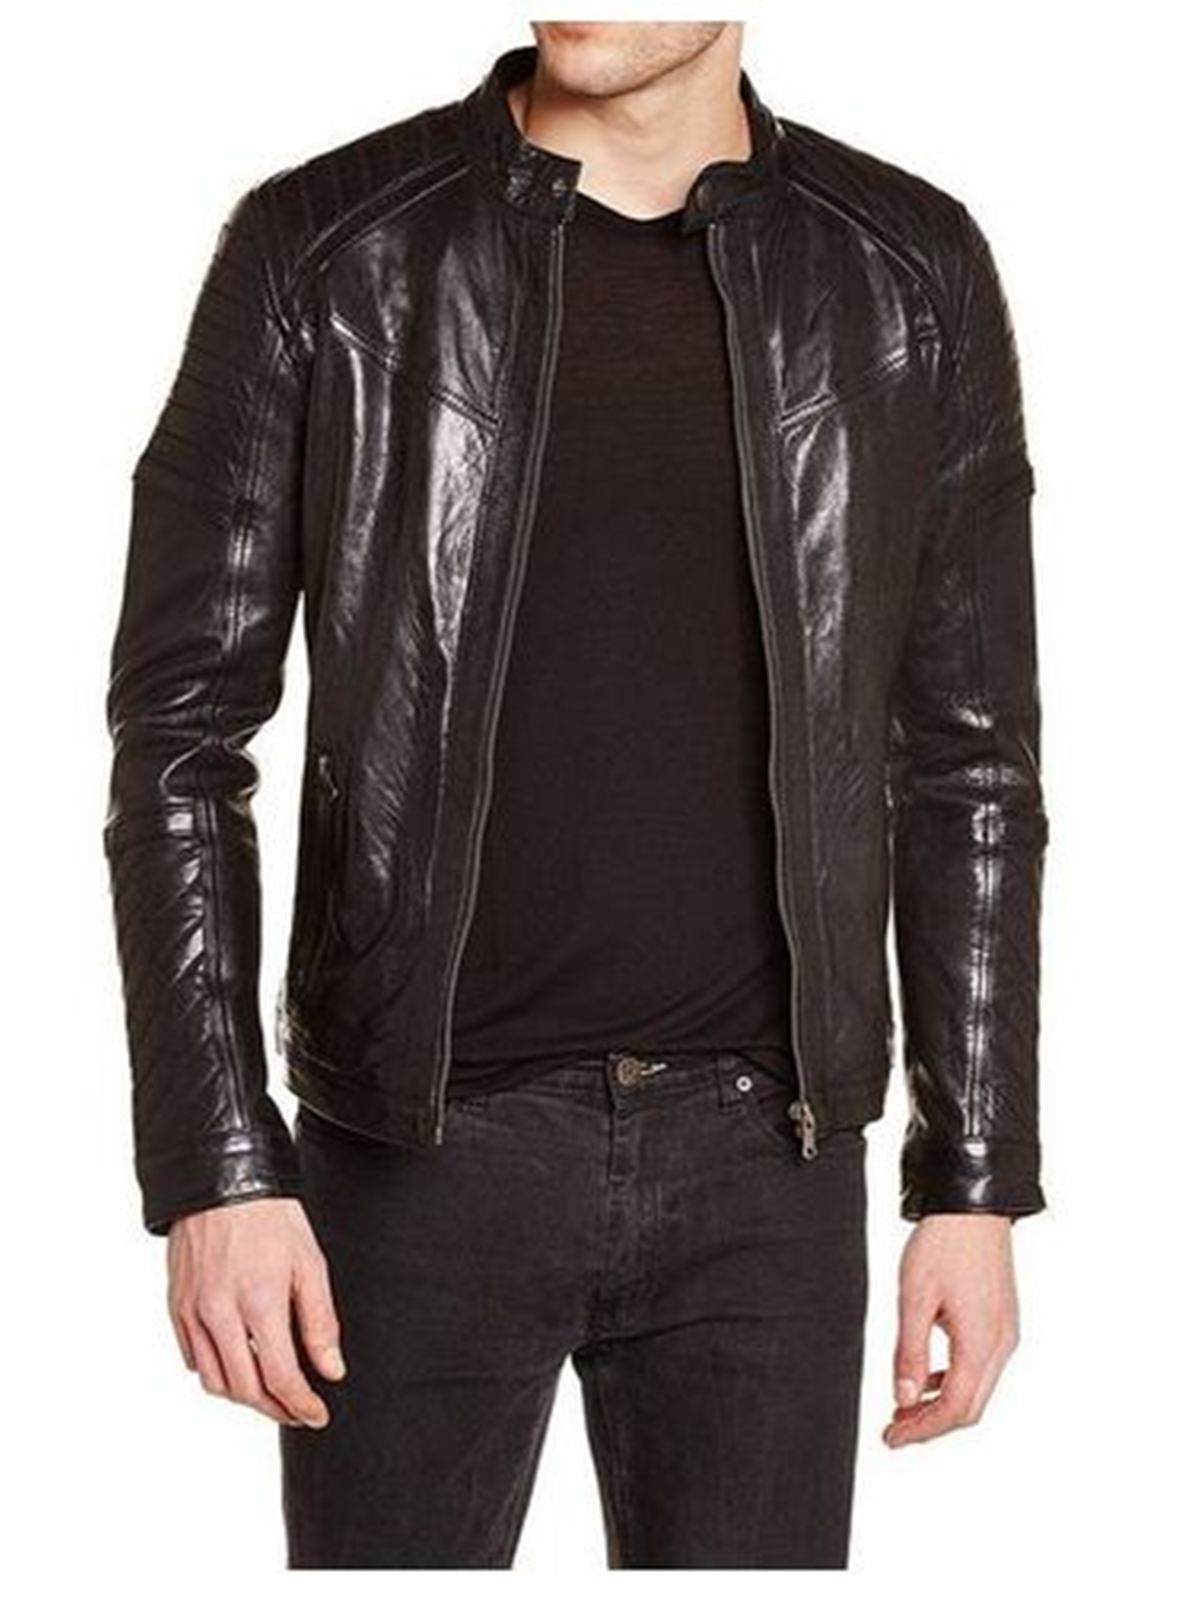 Men Leather Jacket Coat Motorcycle Biker Black Slim Fit Jackets